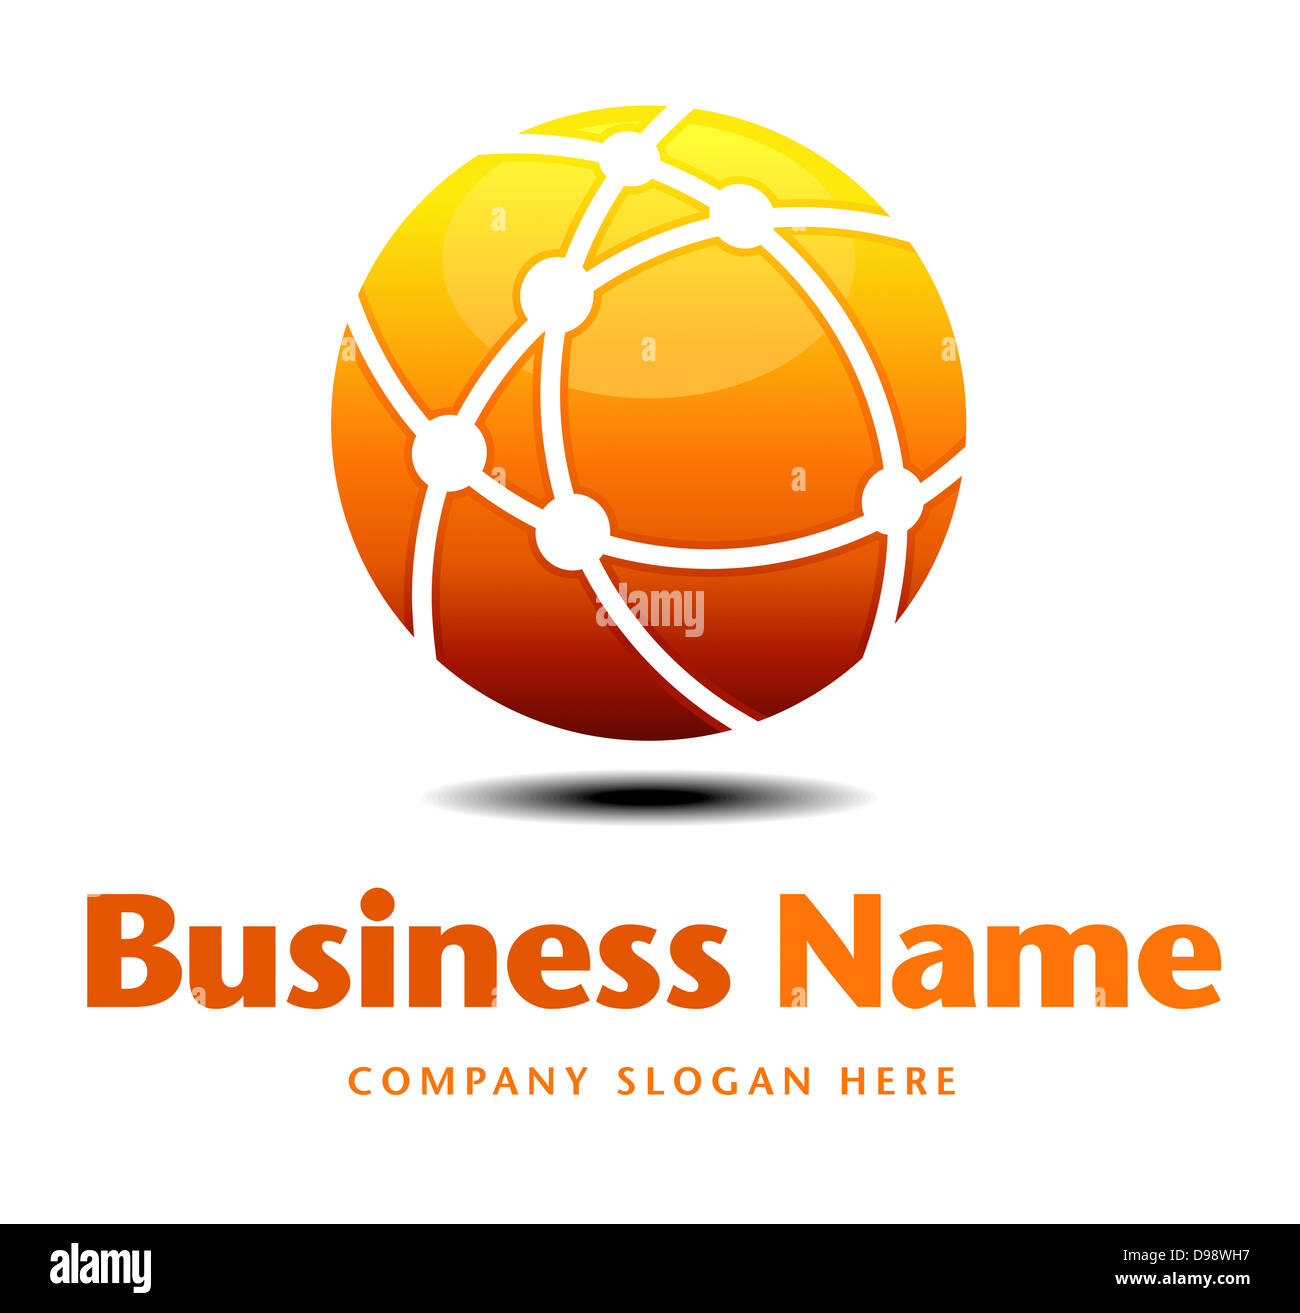 Business Company Logo Symbol Name Concept communication network Stock Photo